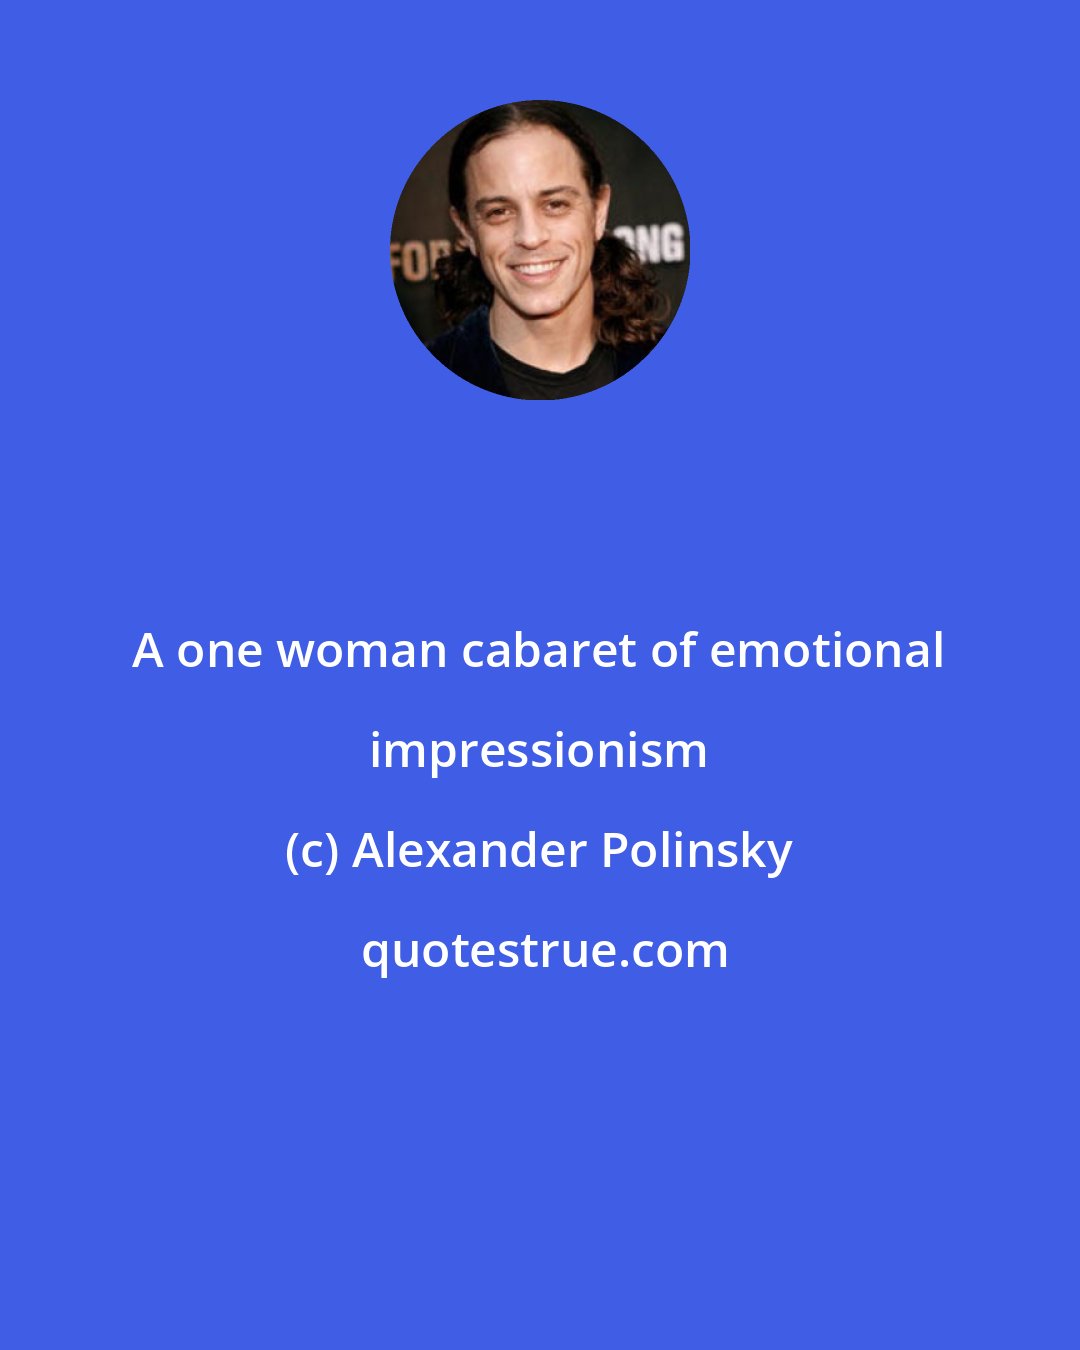 Alexander Polinsky: A one woman cabaret of emotional impressionism